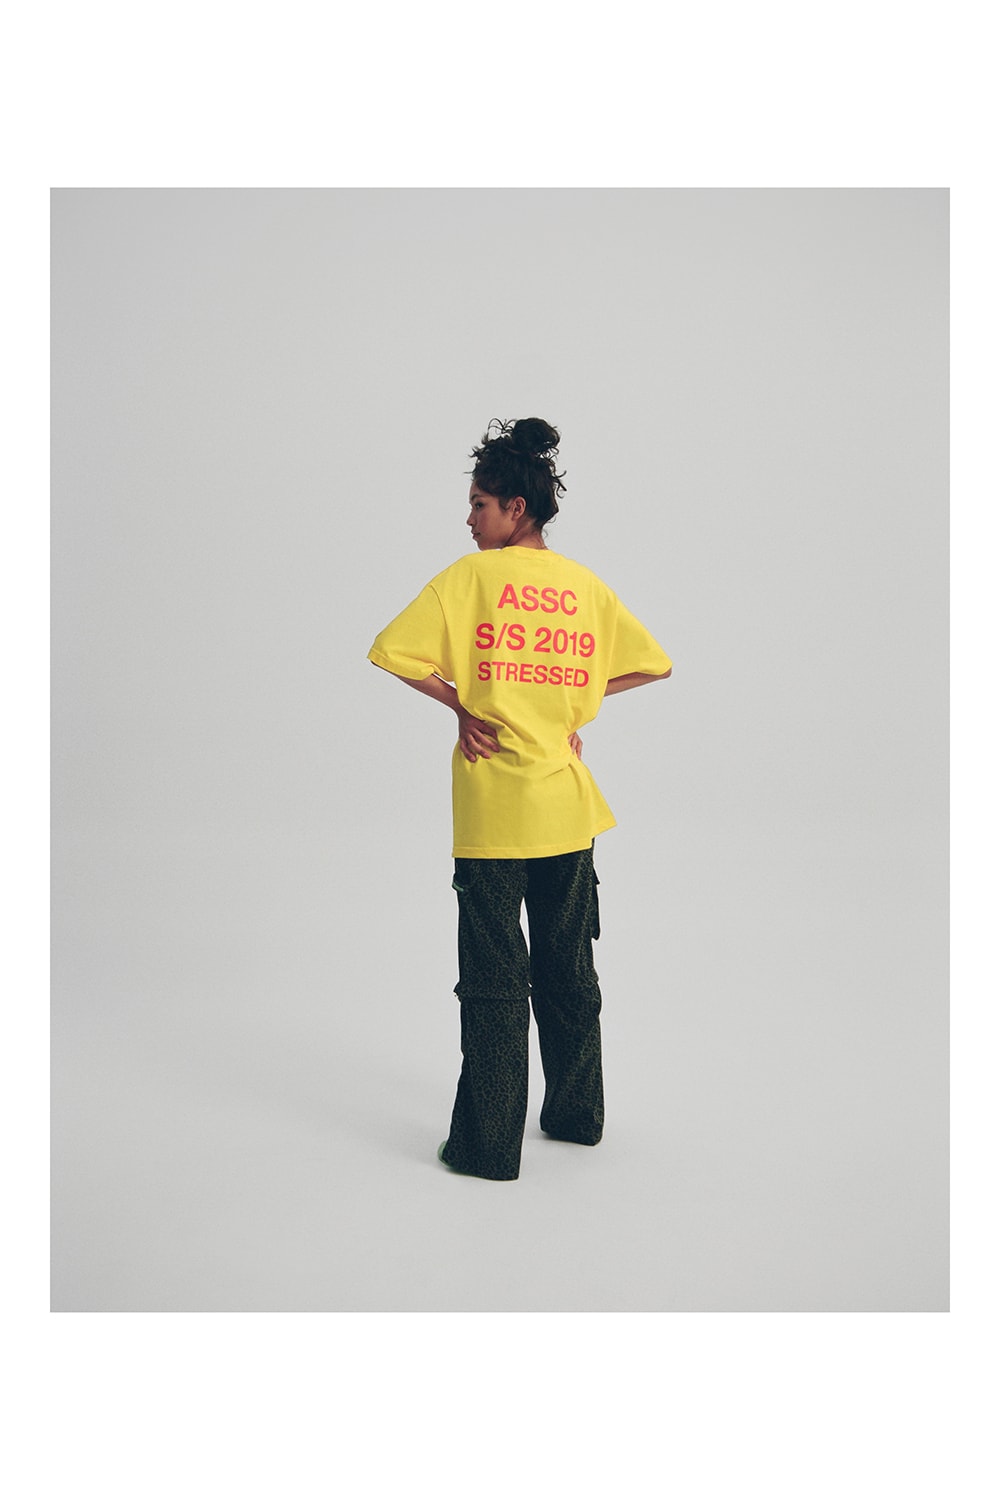 Anti Social Social Club ASSC SS19 Spring Summer 2019 Lookbook Collection Neek Lurk "STRESSED" Drop Streetwear Logomania Get Weird Graphic Hoodie Sweatshirt T Shirt 